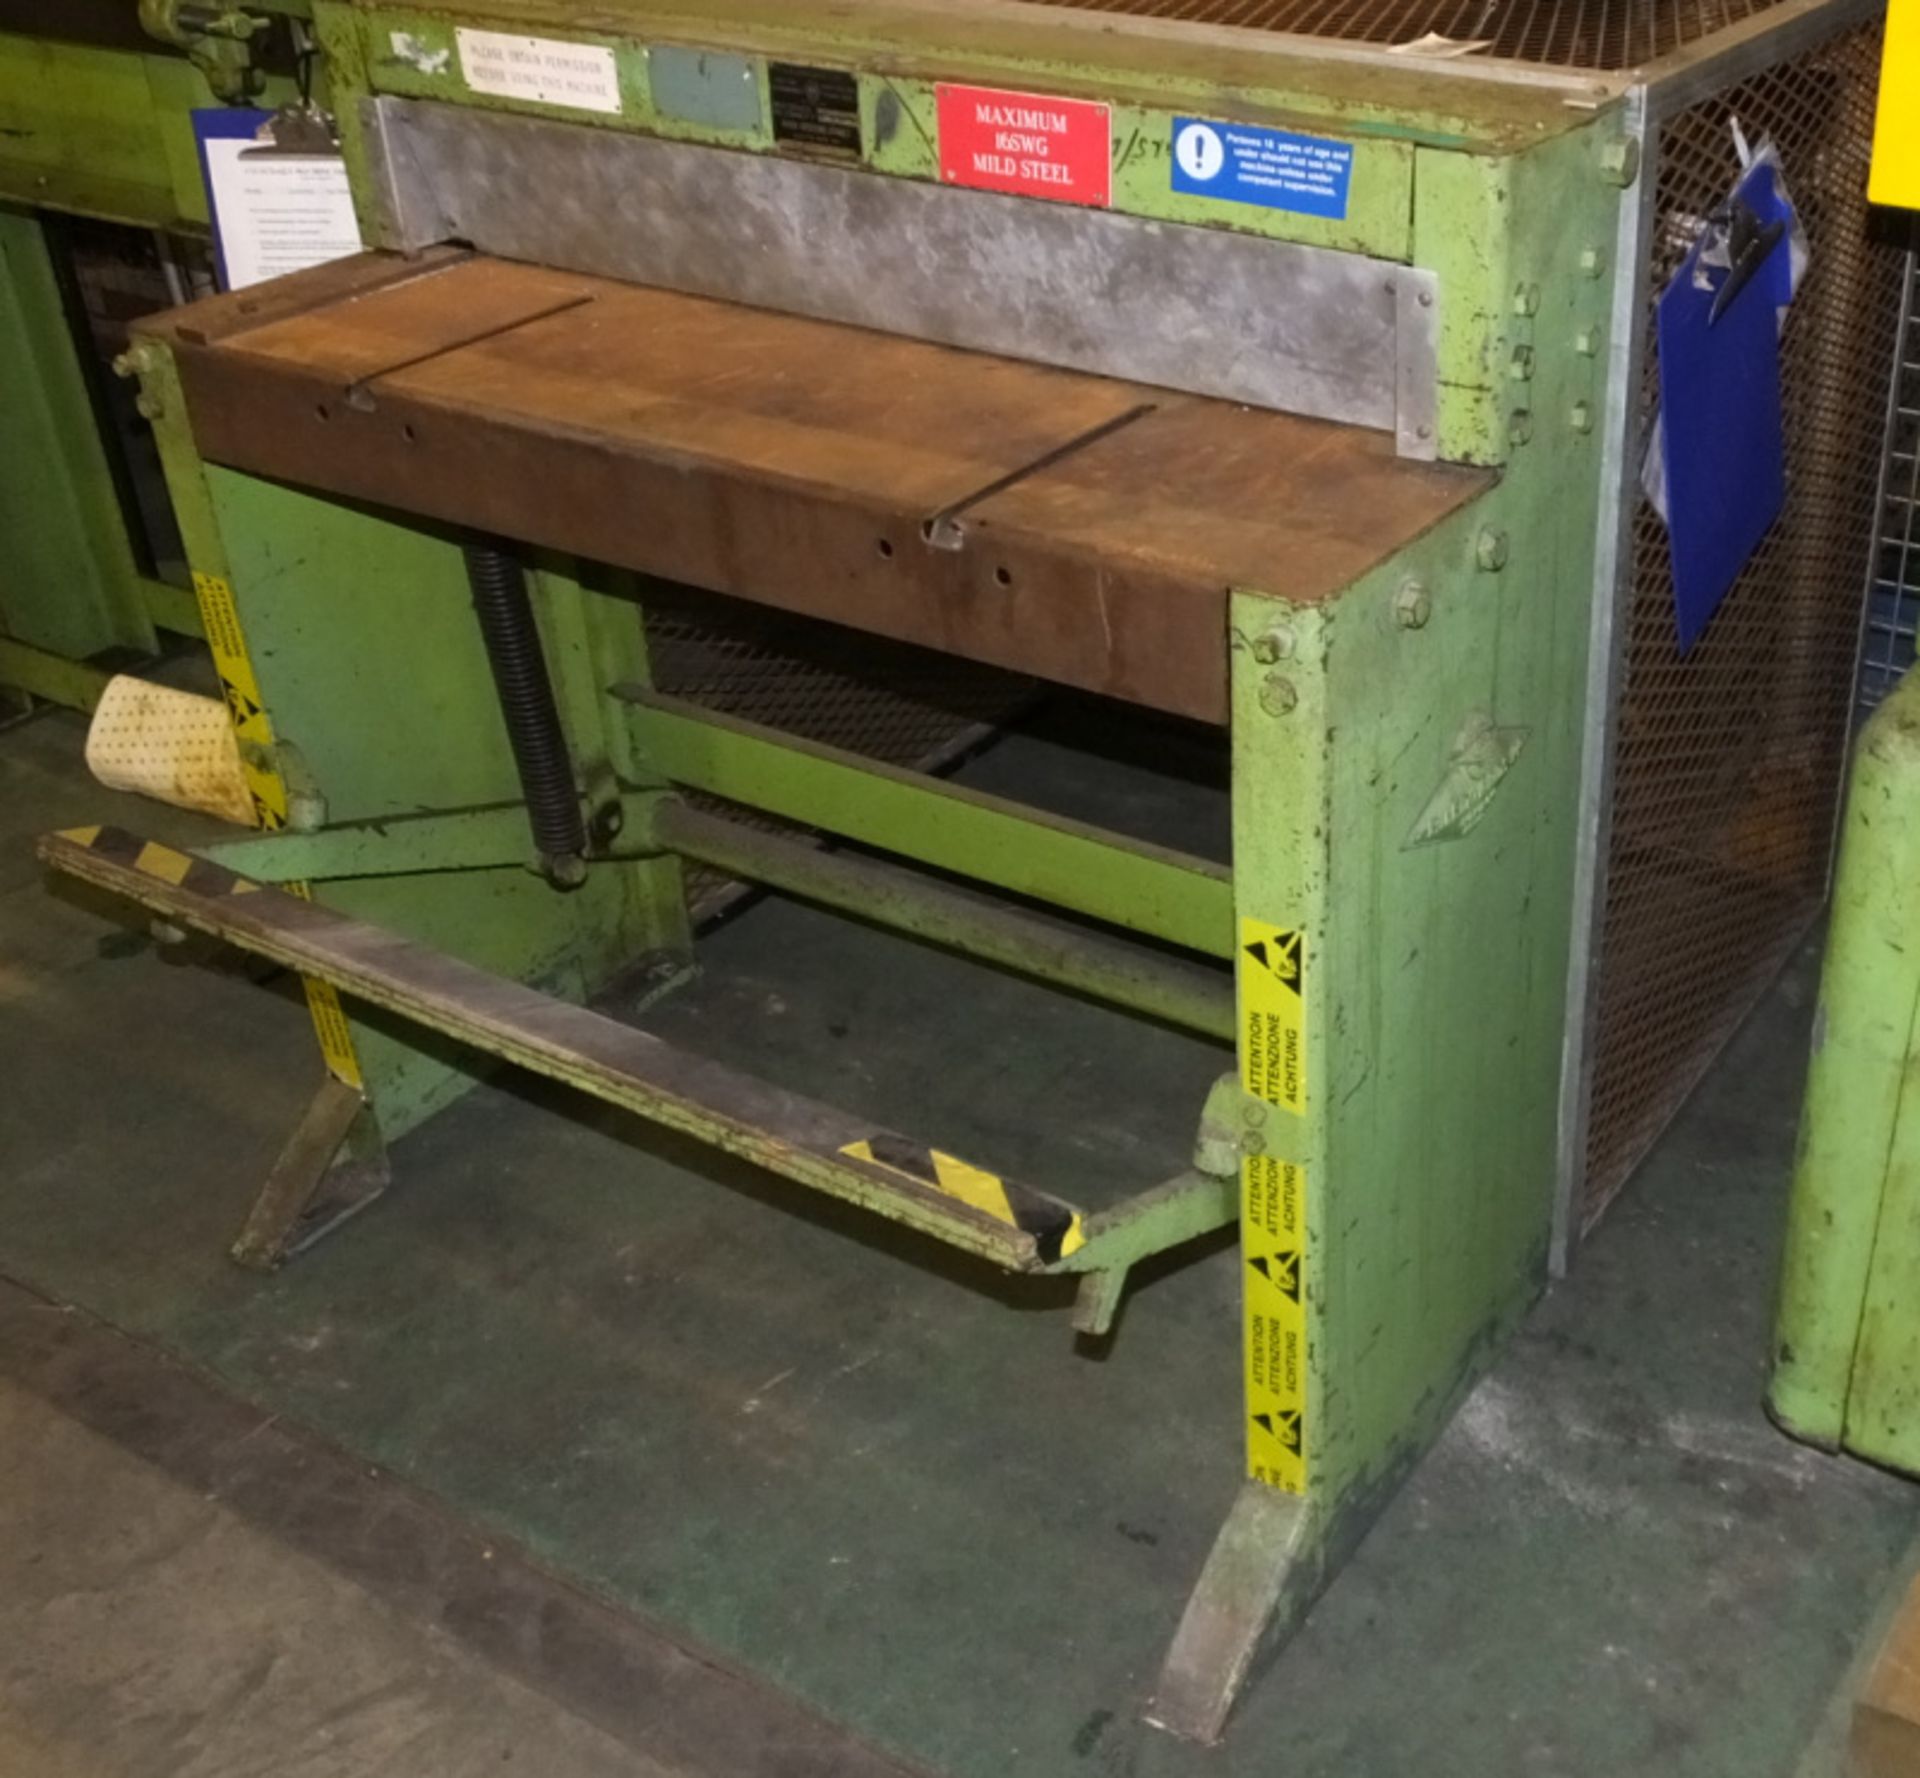 FJ Edwards Ltd manual guillotine - machine no 3780 ISS 2 - 88C 8747 - 3ft x 16G - Image 4 of 6